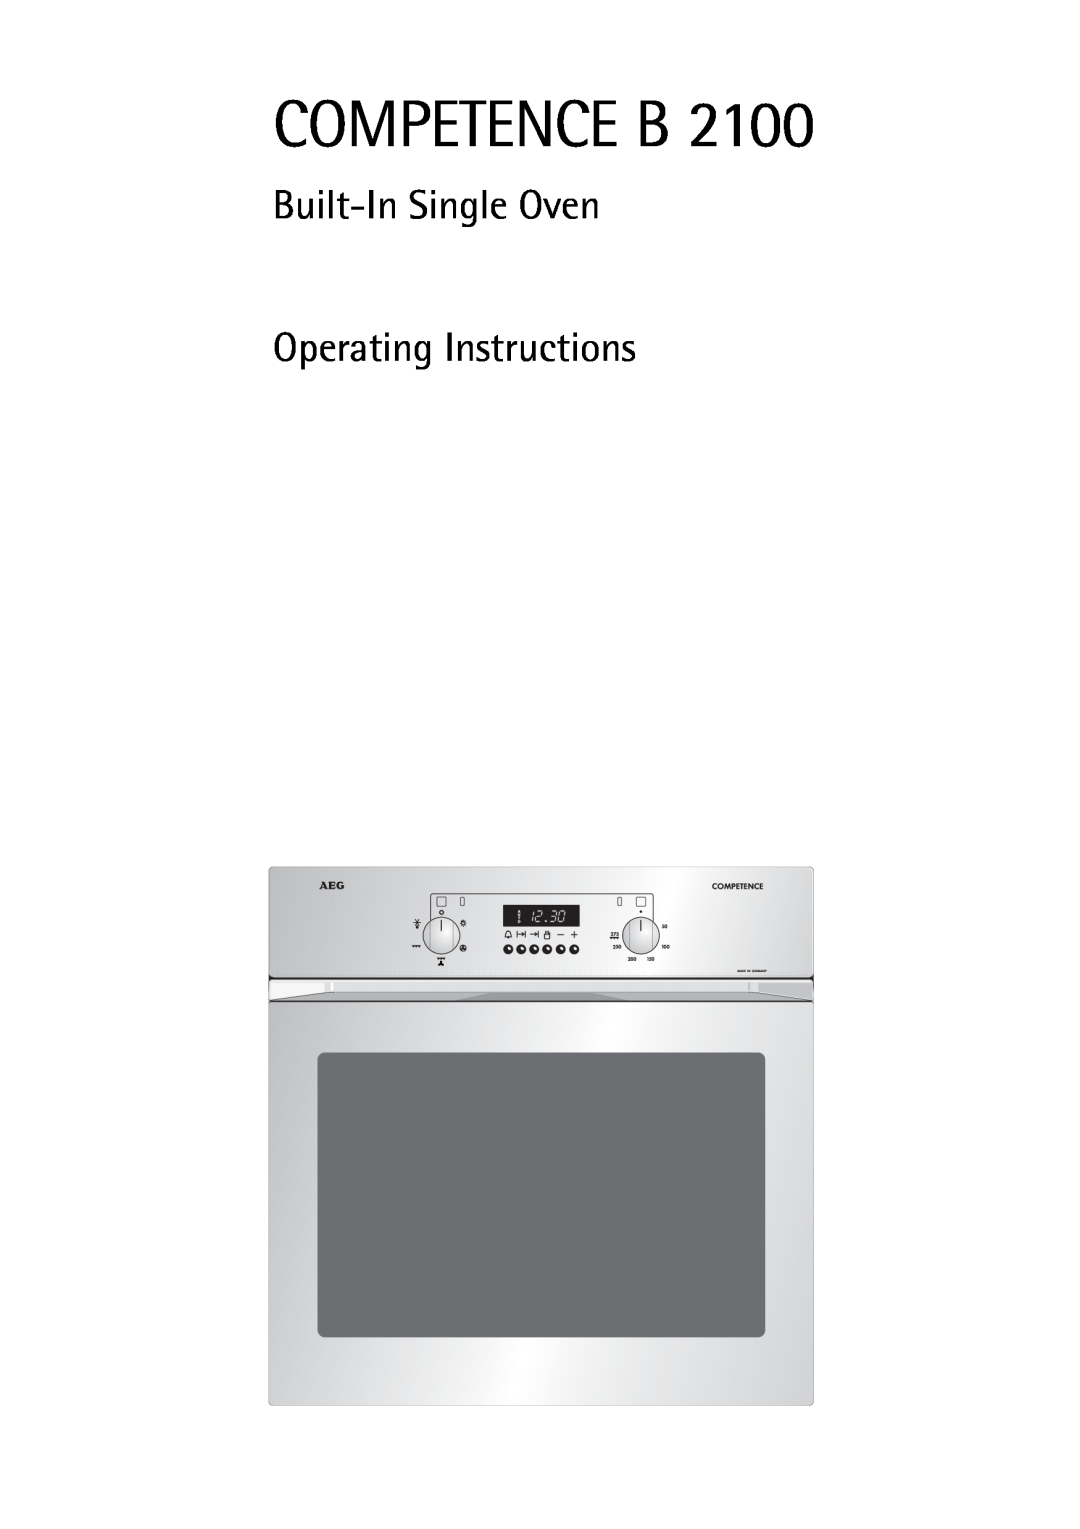 AEG B 2100 operating instructions Competence B, Built-InSingle Oven Operating Instructions 